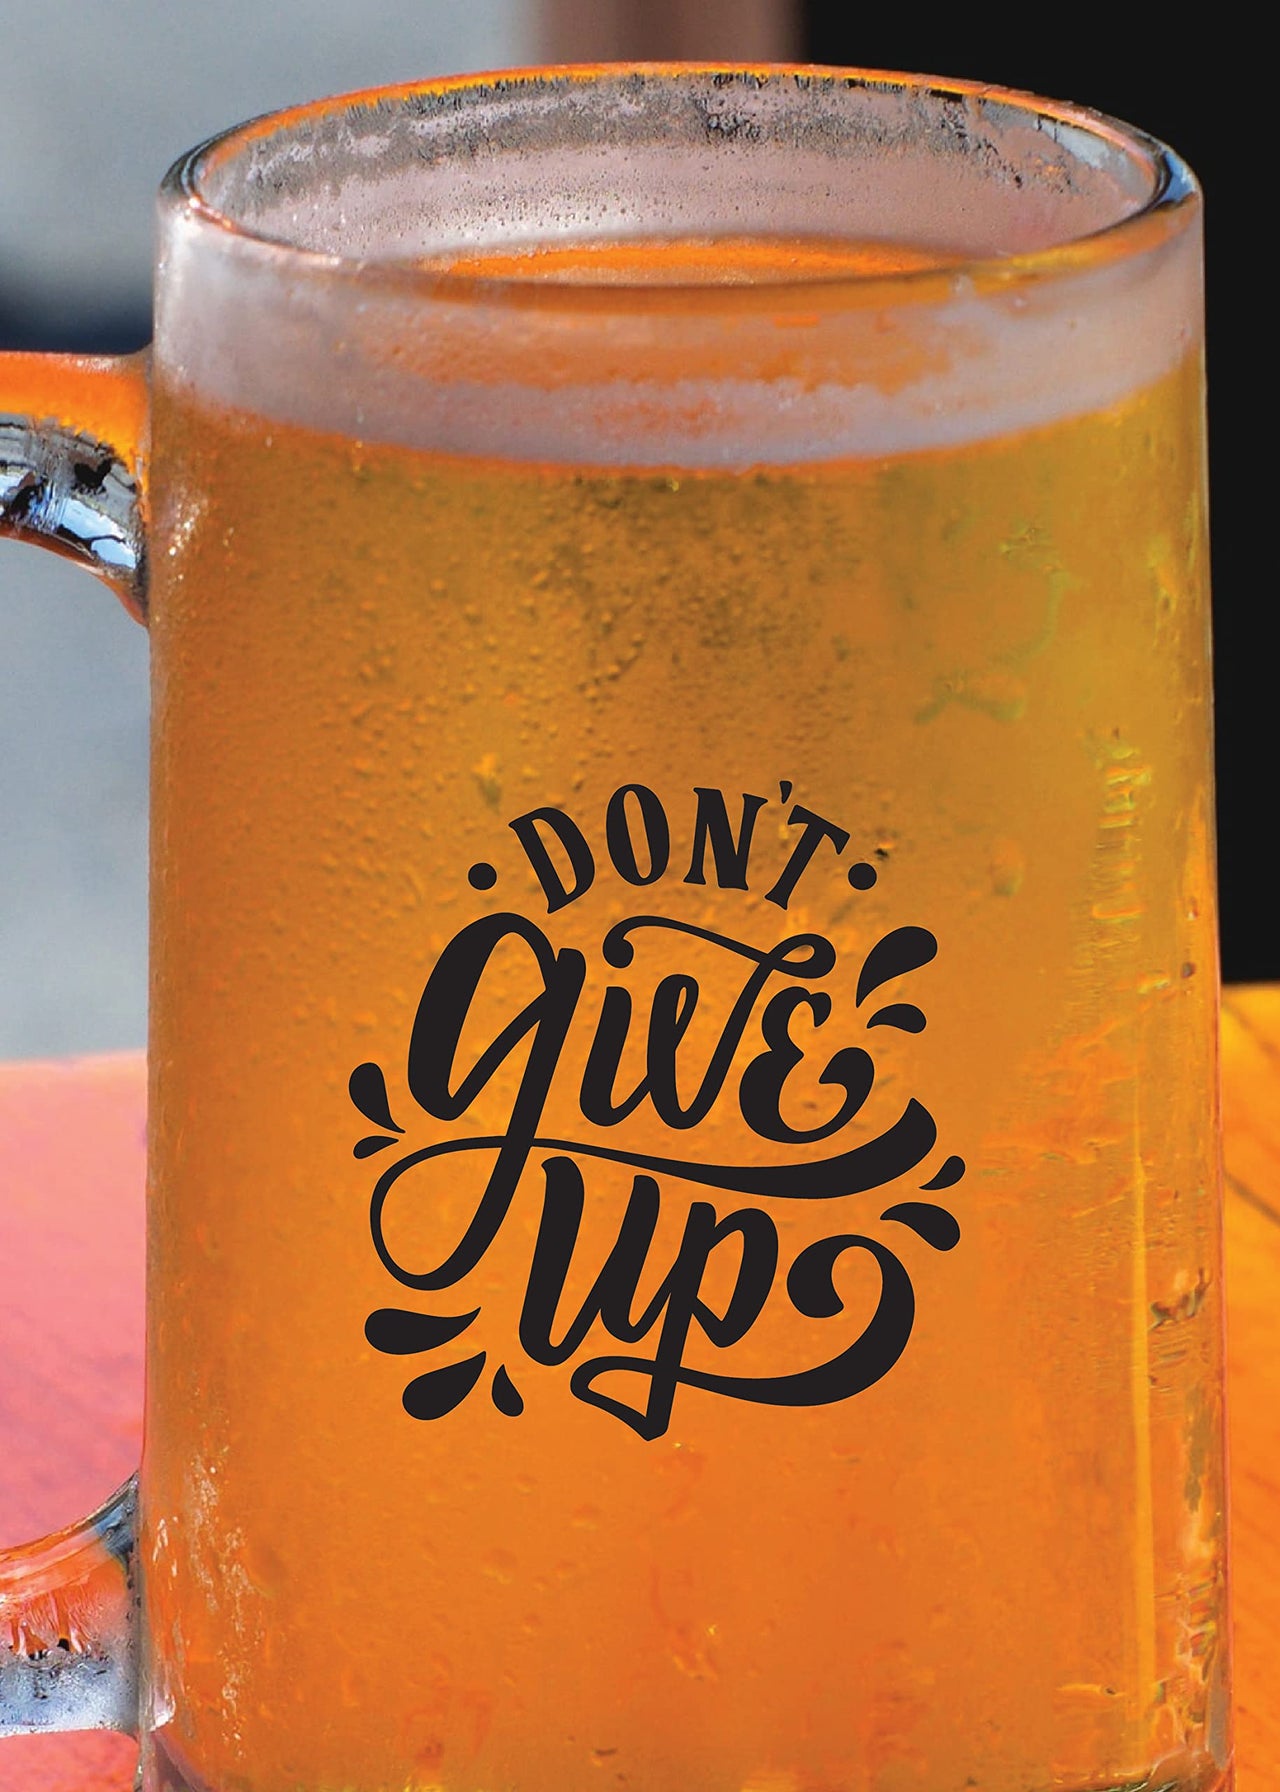 Don't Give Up - Beer Mug -1 Piece, Clear, 500 ml - Transparent Glass Beer Mug - Printed Beer Mug with Handle